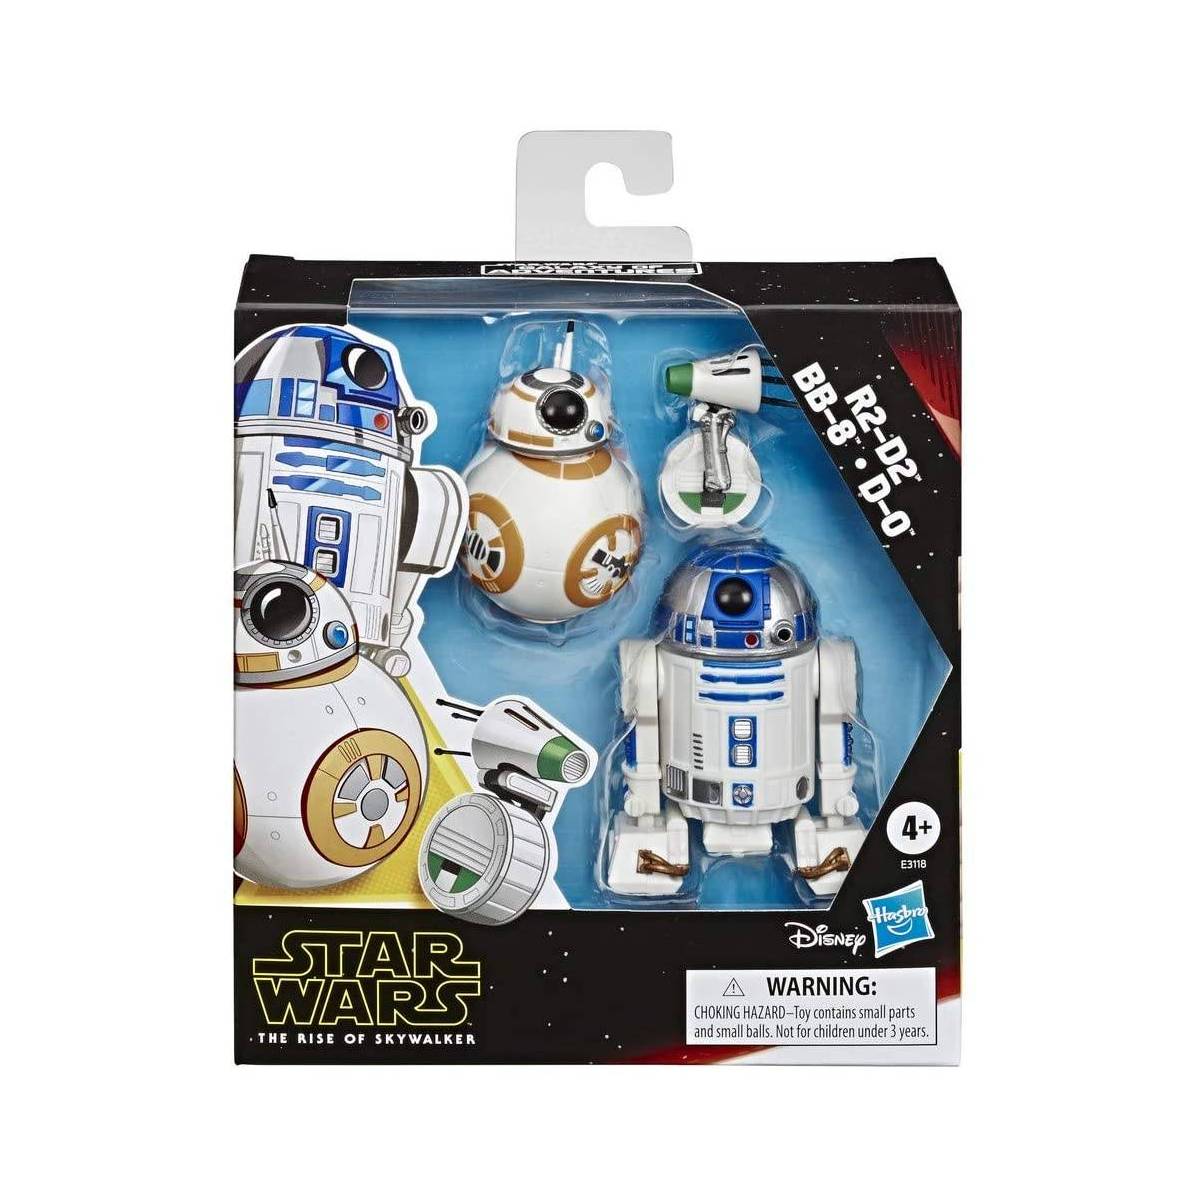 Figurines Star Wars R2-D2 BB-8 et D-0 12.5 cm Galaxy of Adventures